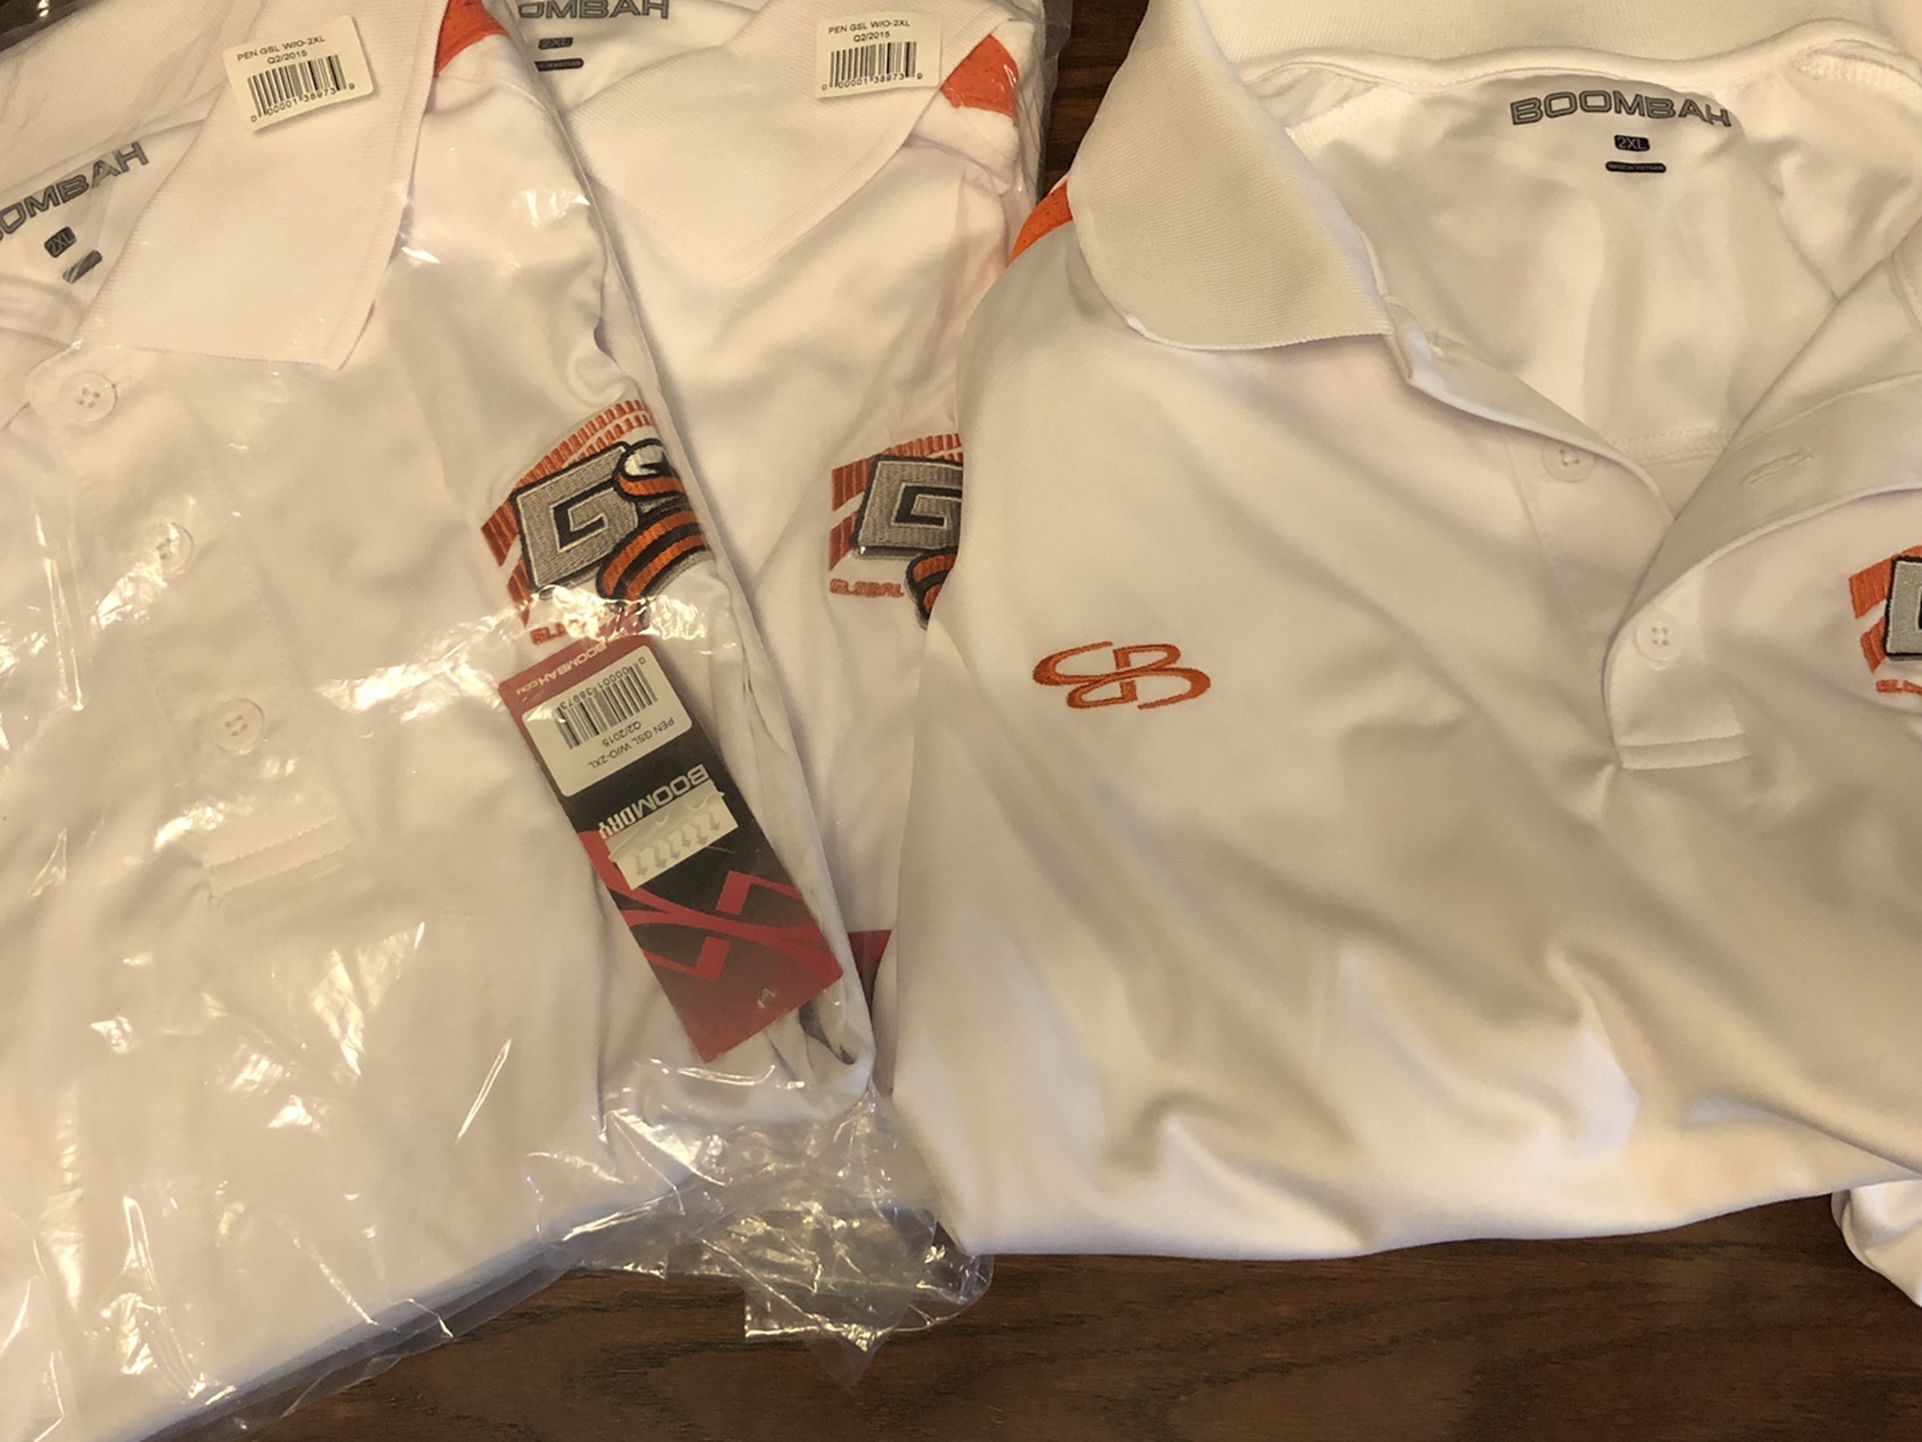 GSL Set Of 3 Umpire Shirts